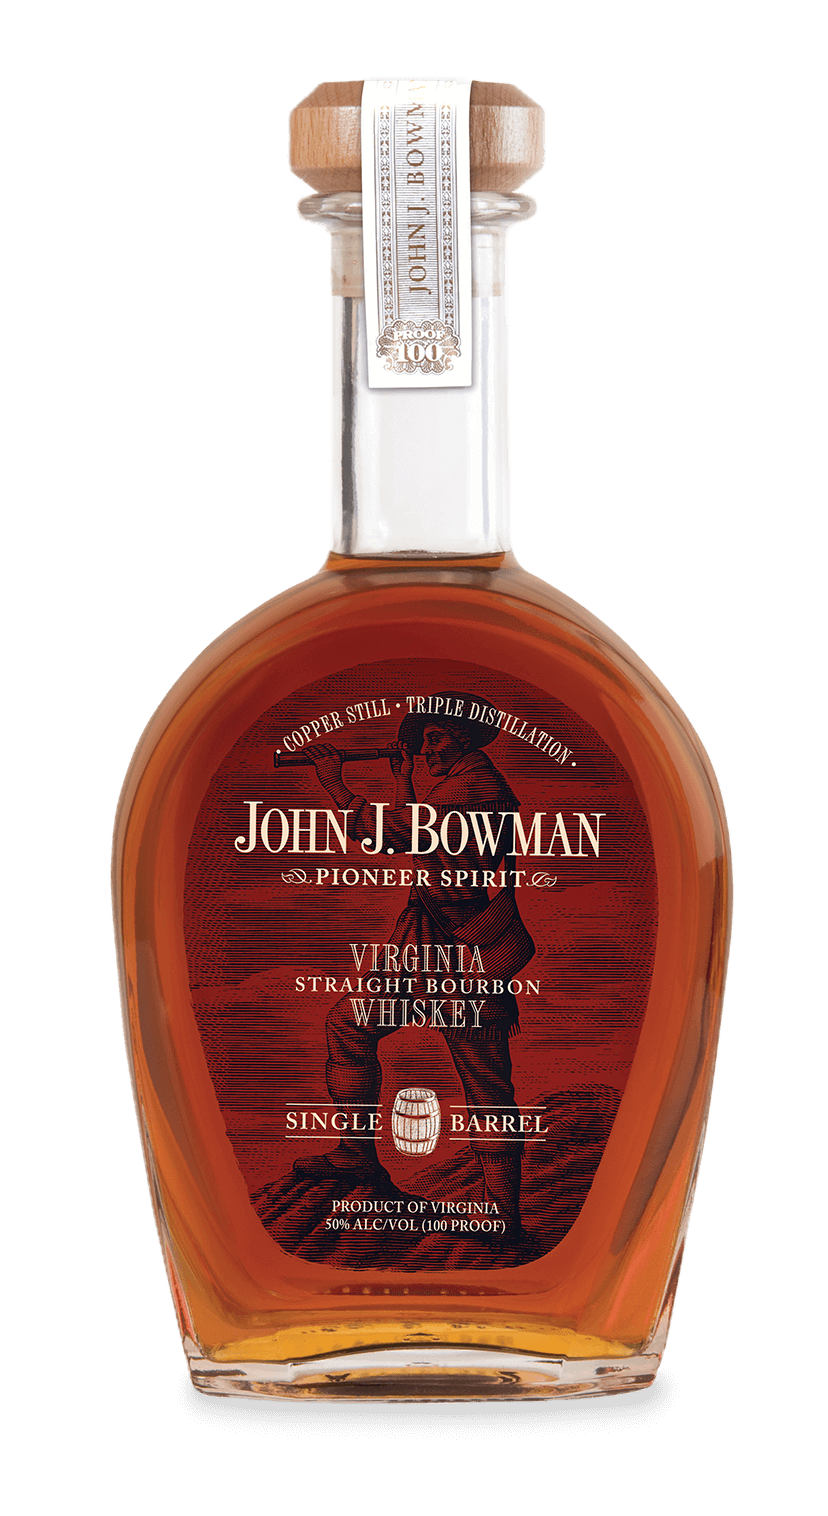 John J. Bowman Single Barrel Bourbon Whiskey